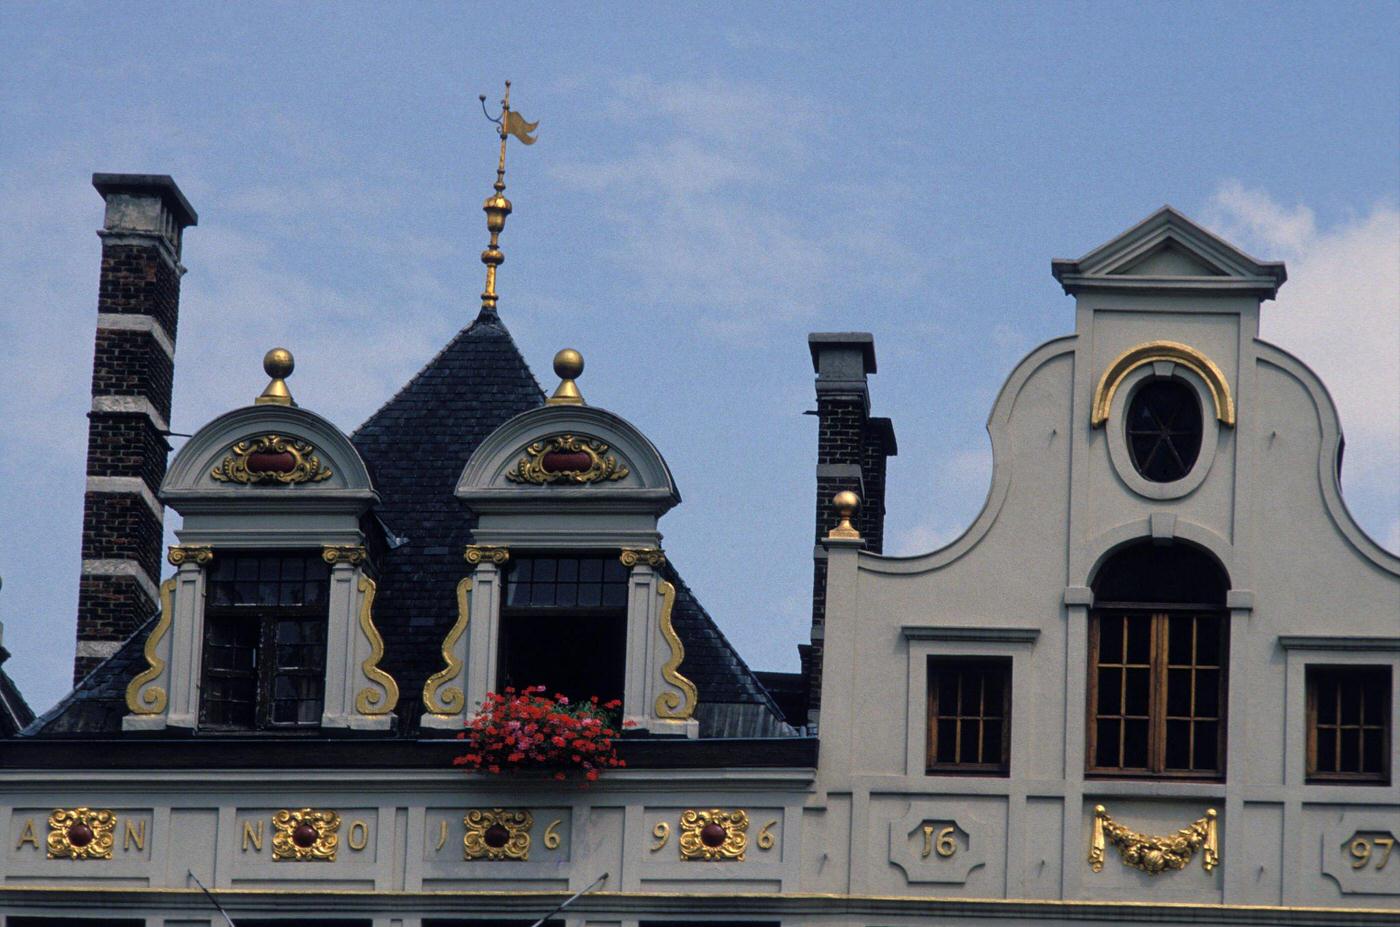 Grand Place in Brussels, Belgium, 1986.